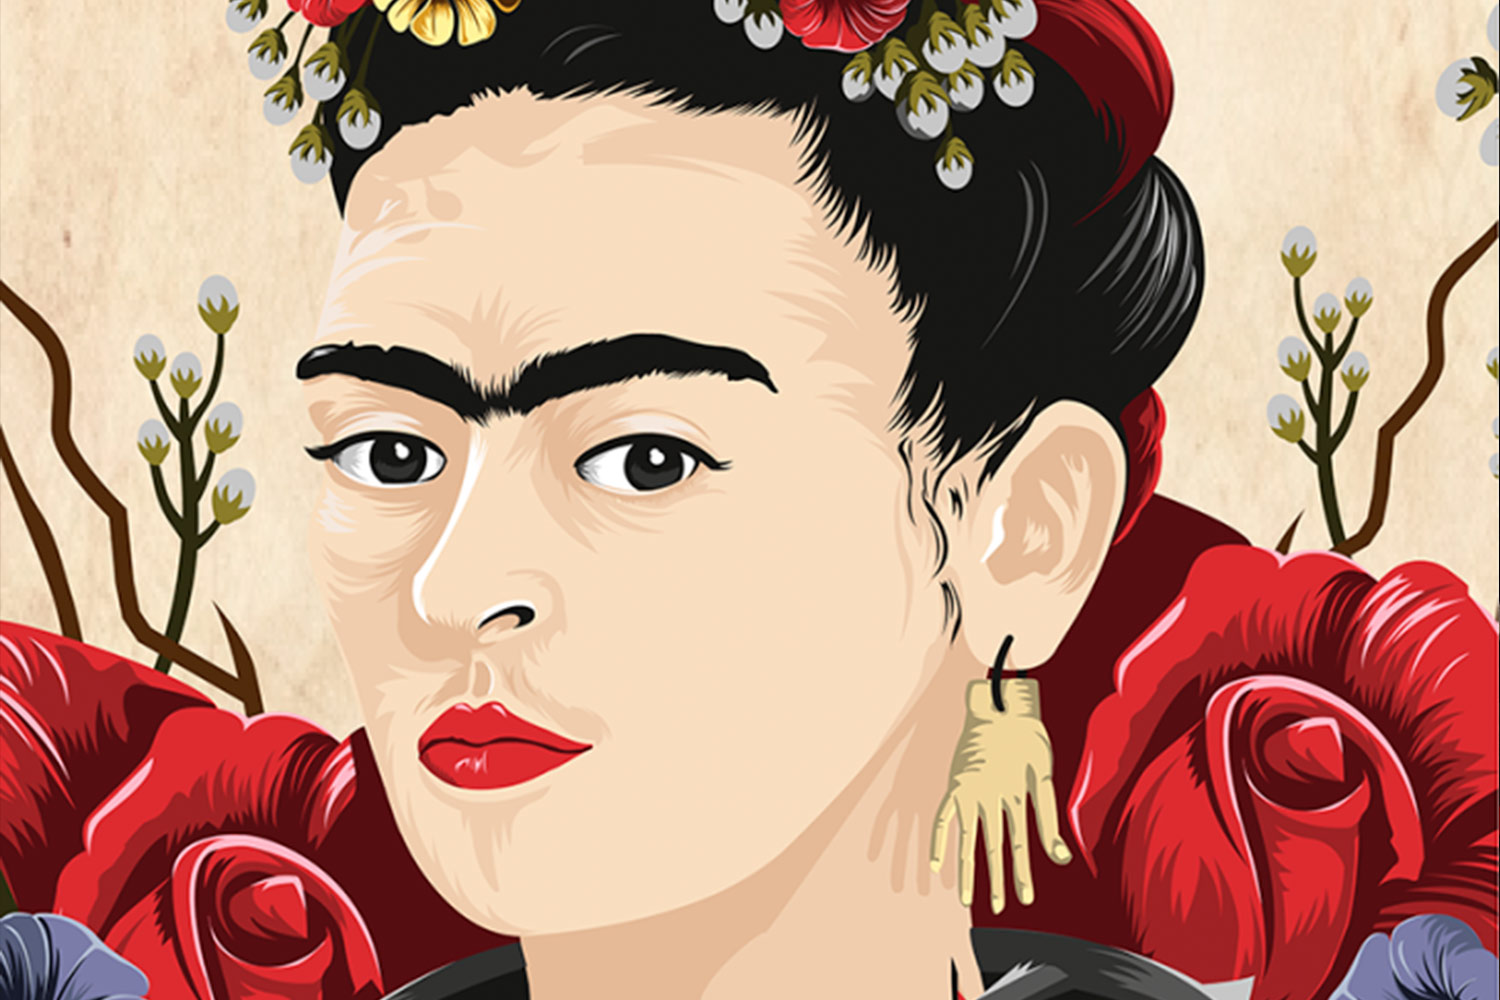 Frida Kahlo's portrait